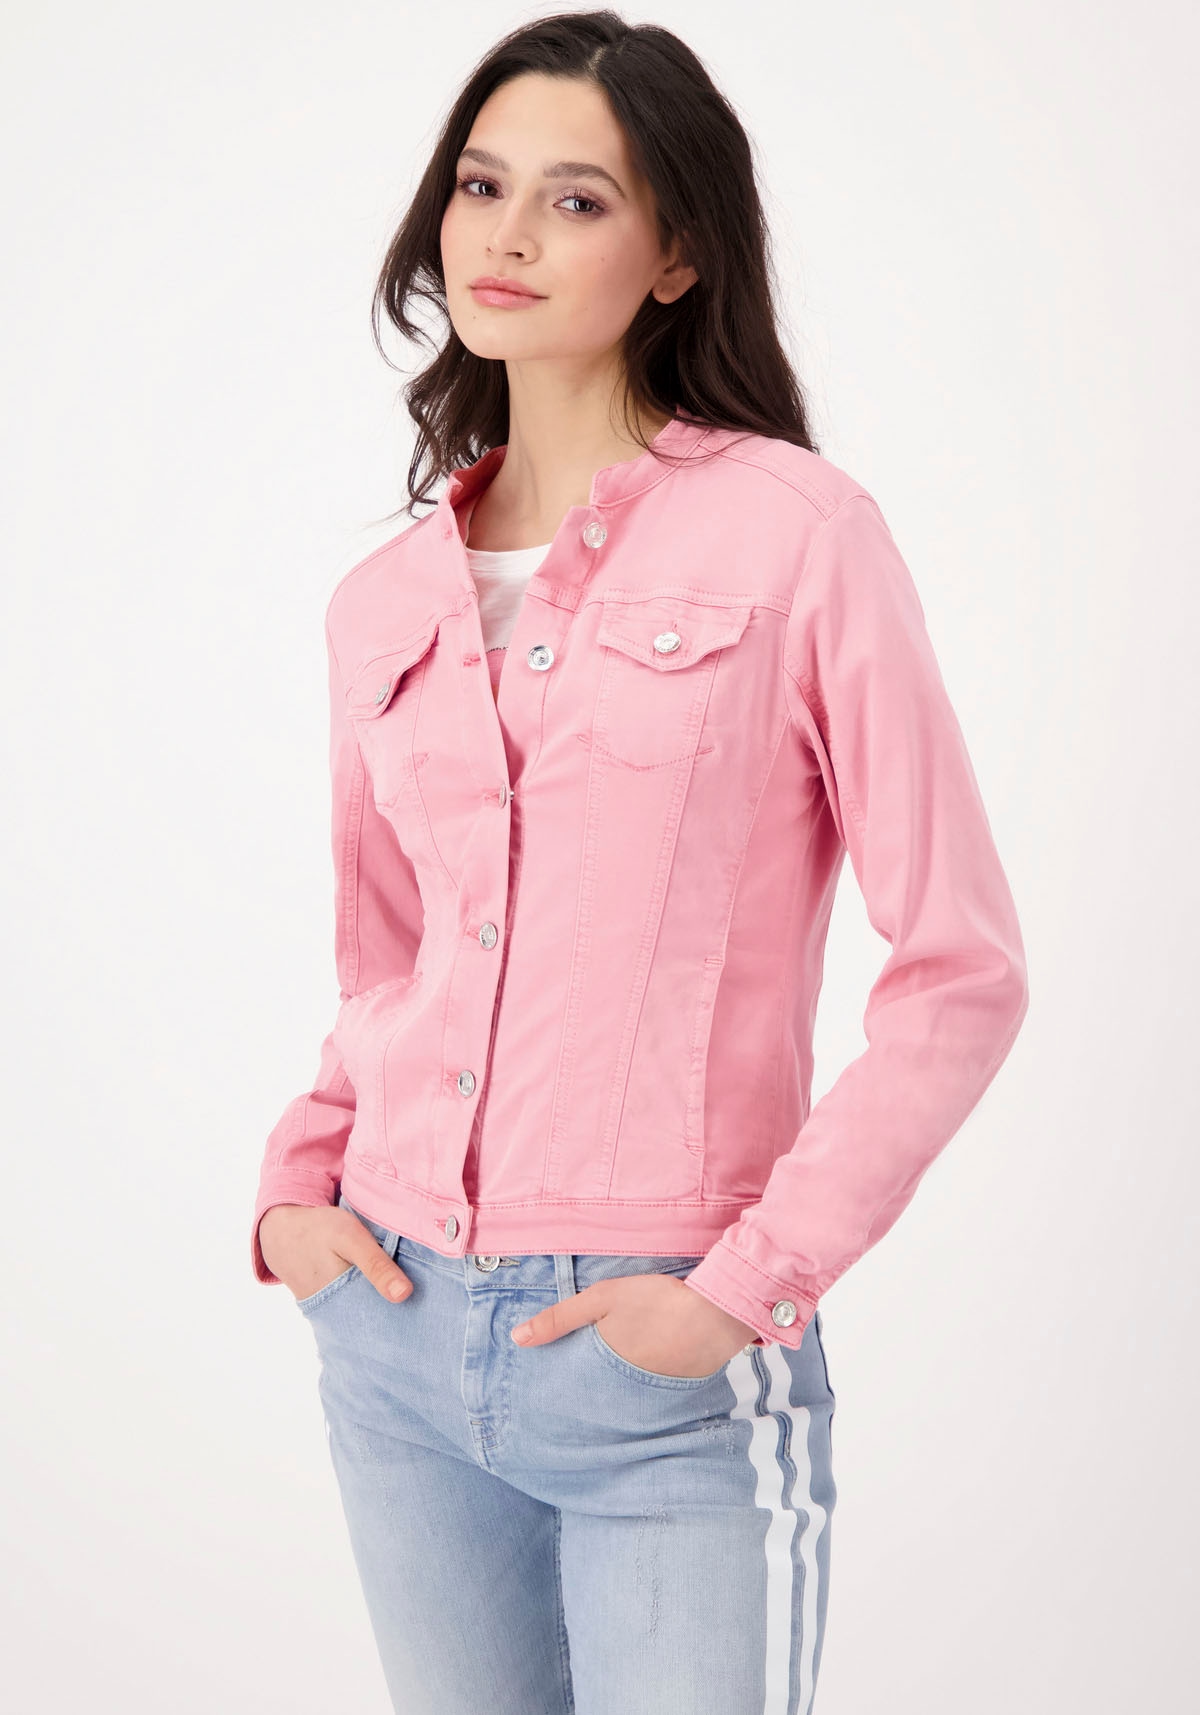 Jeansjacken Damen rosa online kaufen walking I\'m »